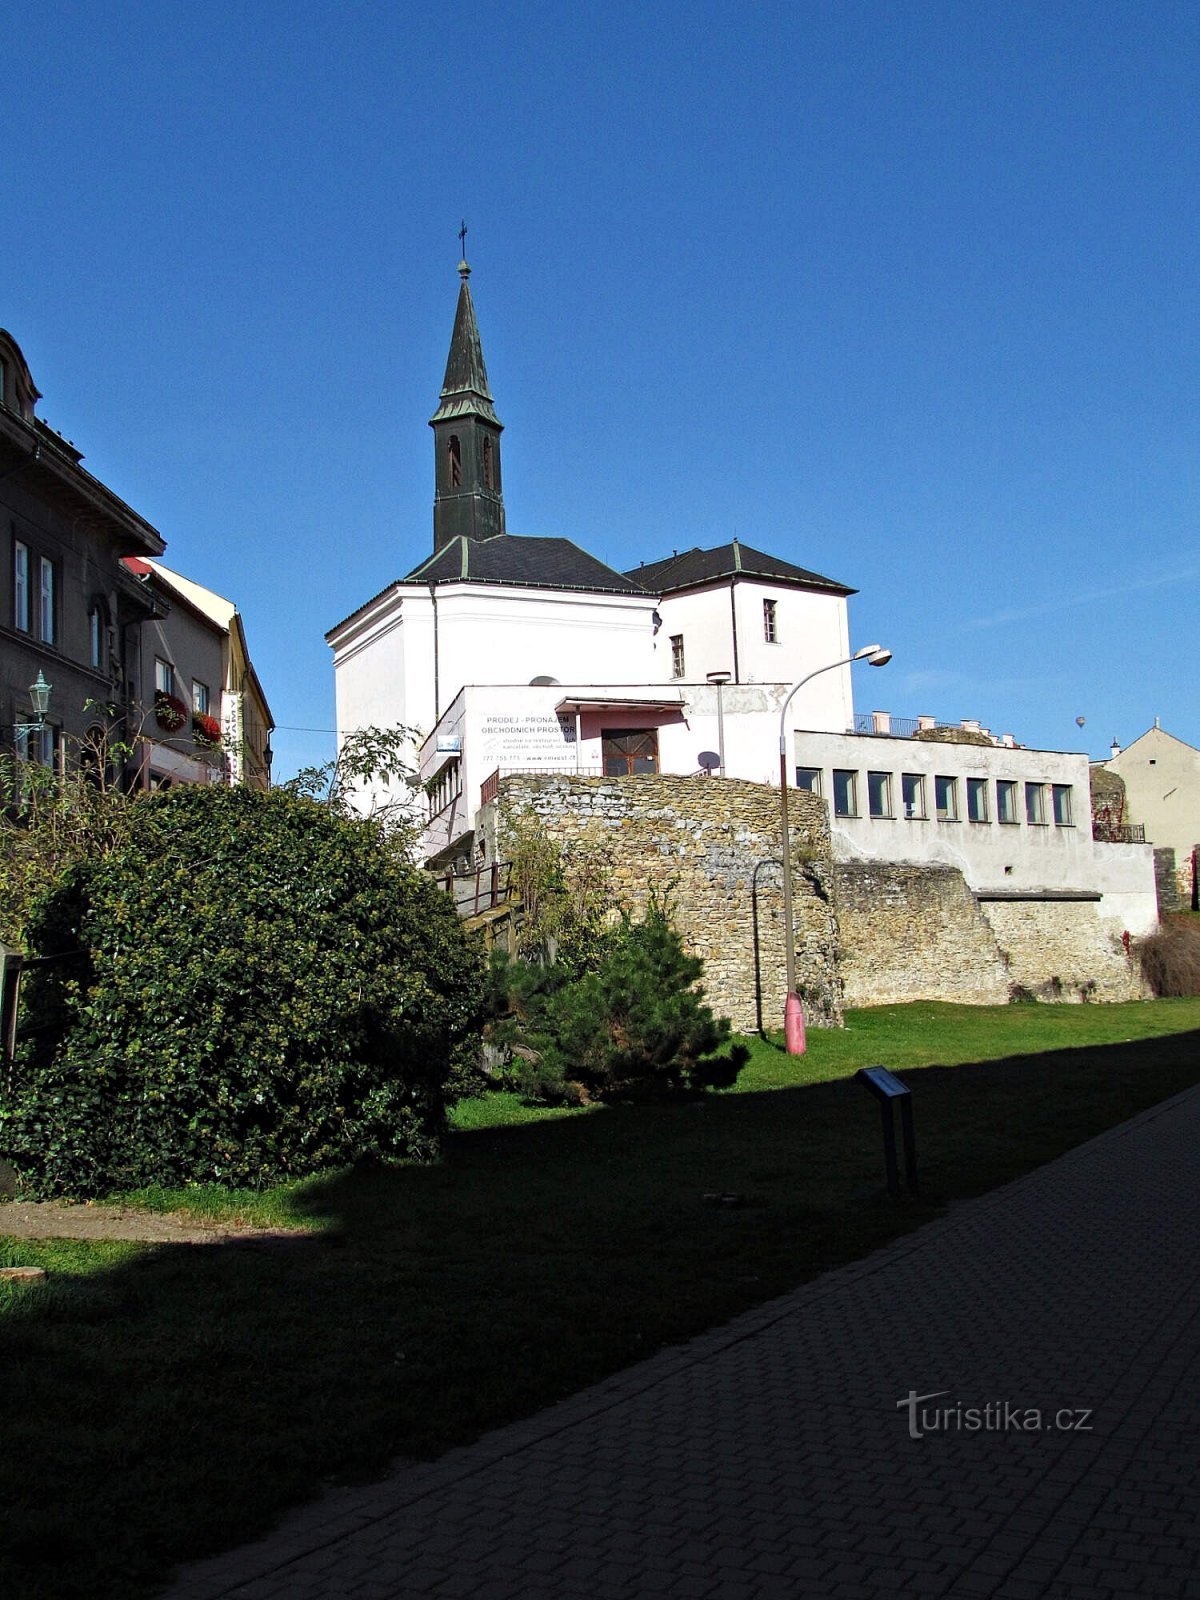 St. George's Church in Přerov